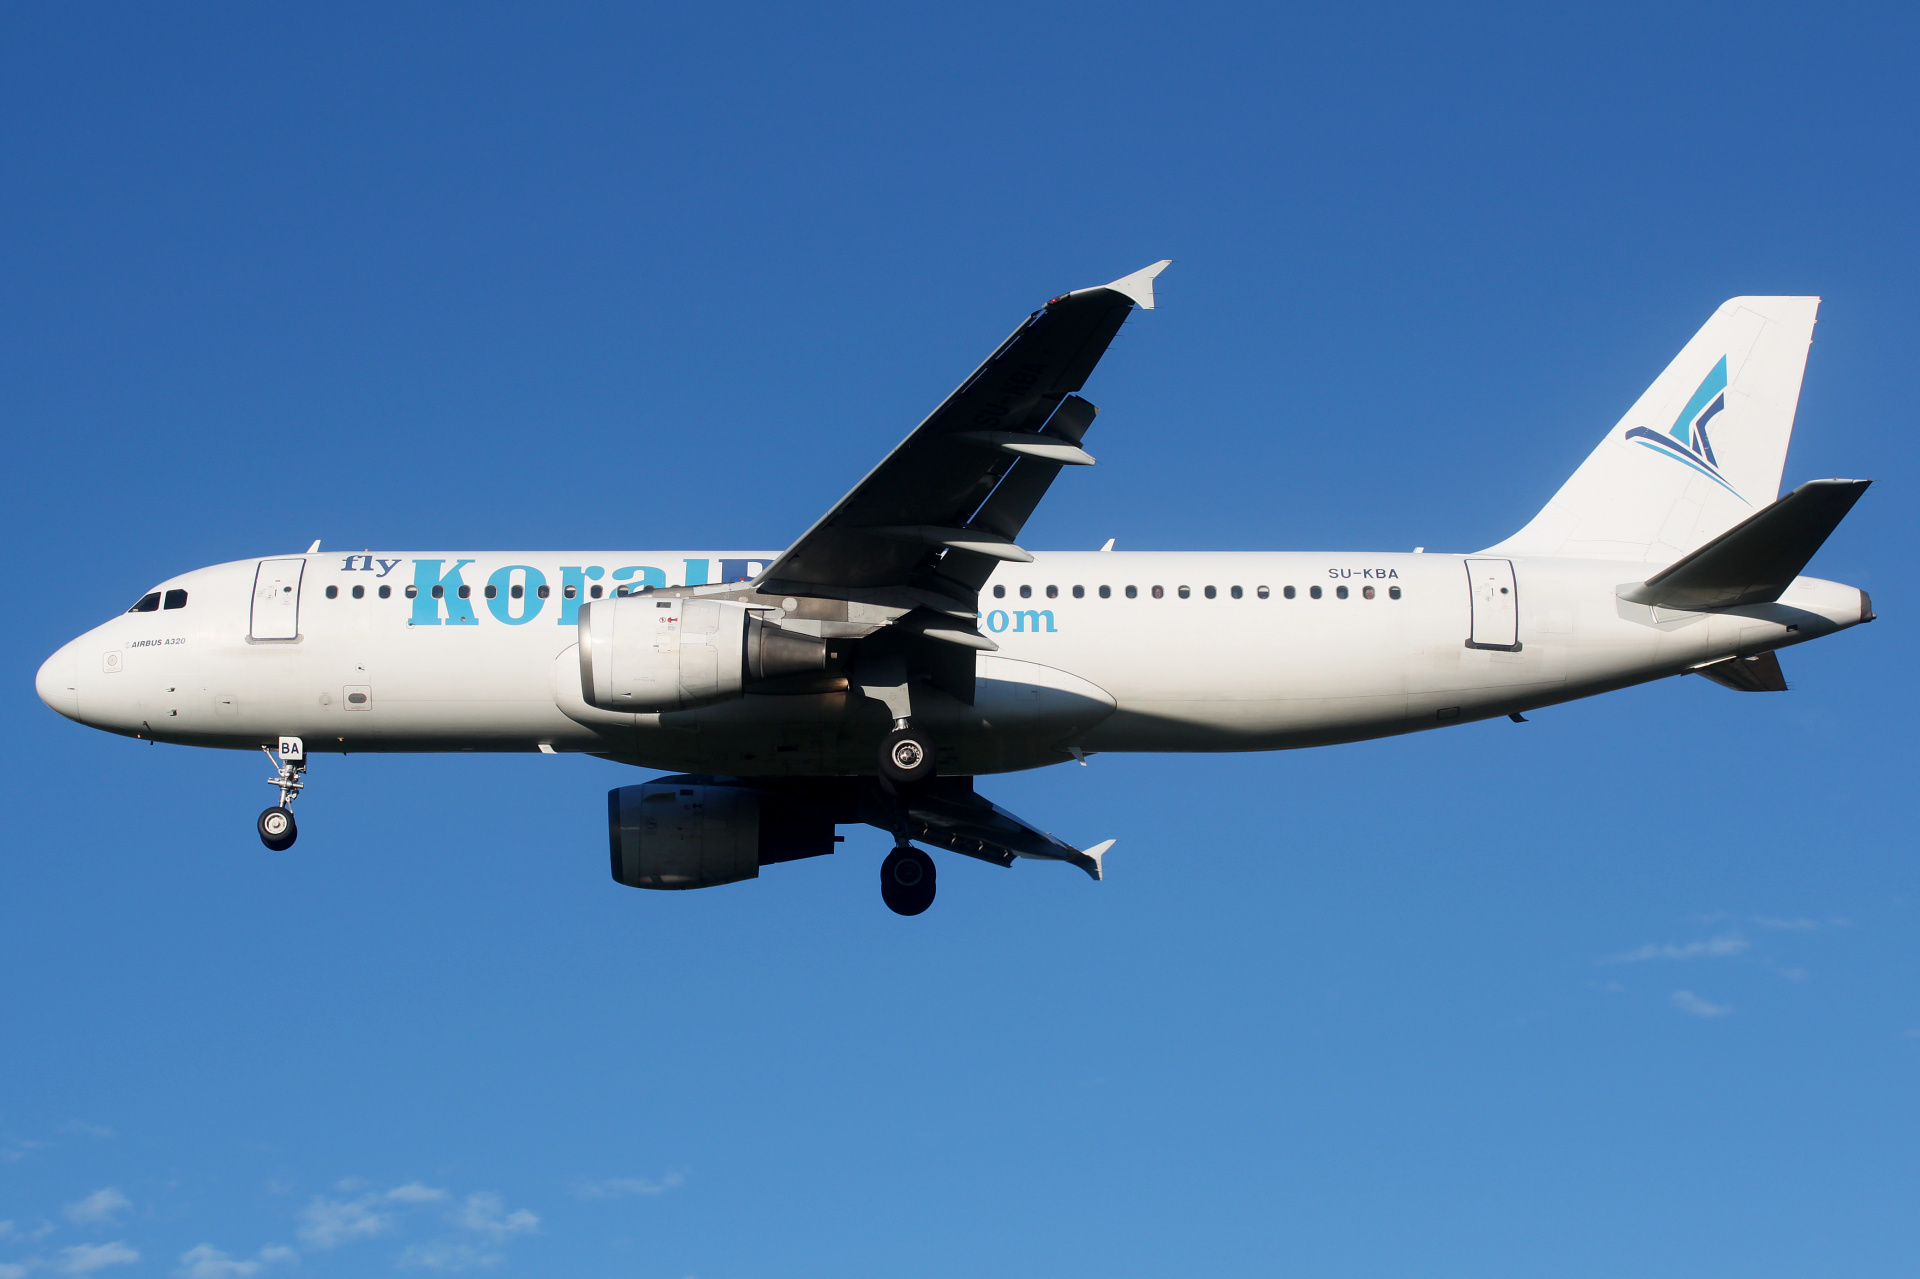 SU-KBA, Koral Blue (Aircraft » EPWA Spotting » Airbus A320-200)